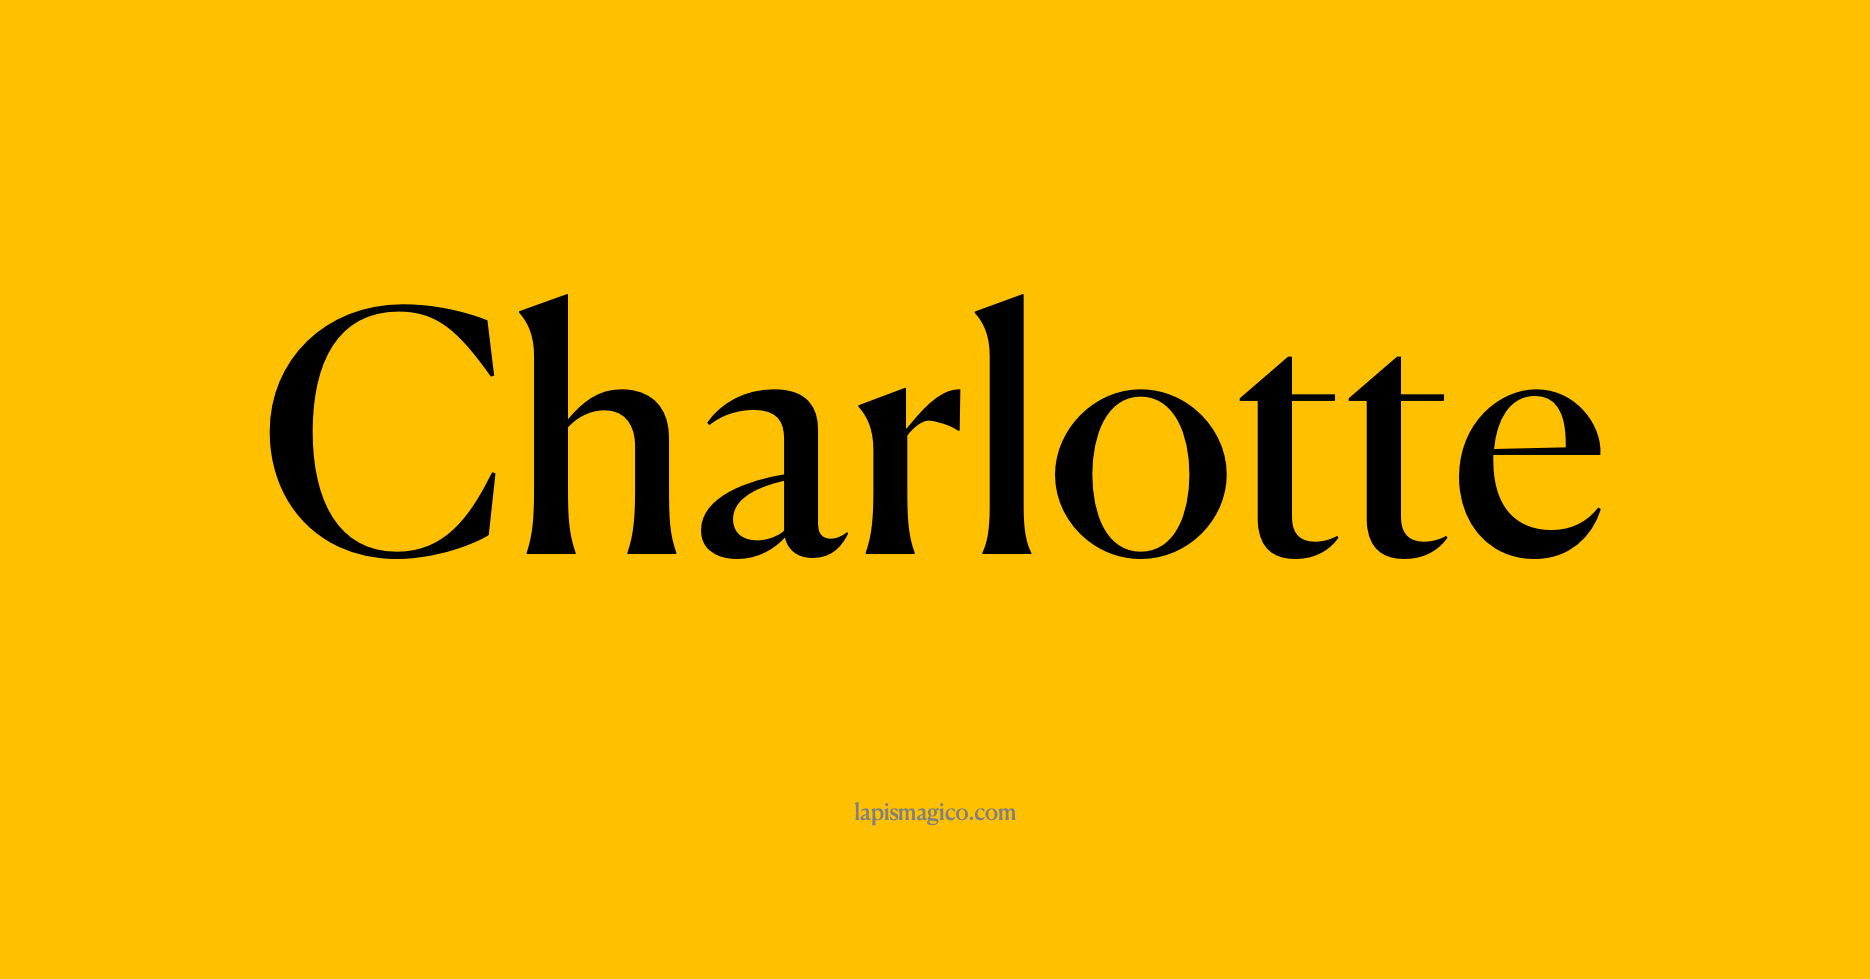 Nome Charlotte